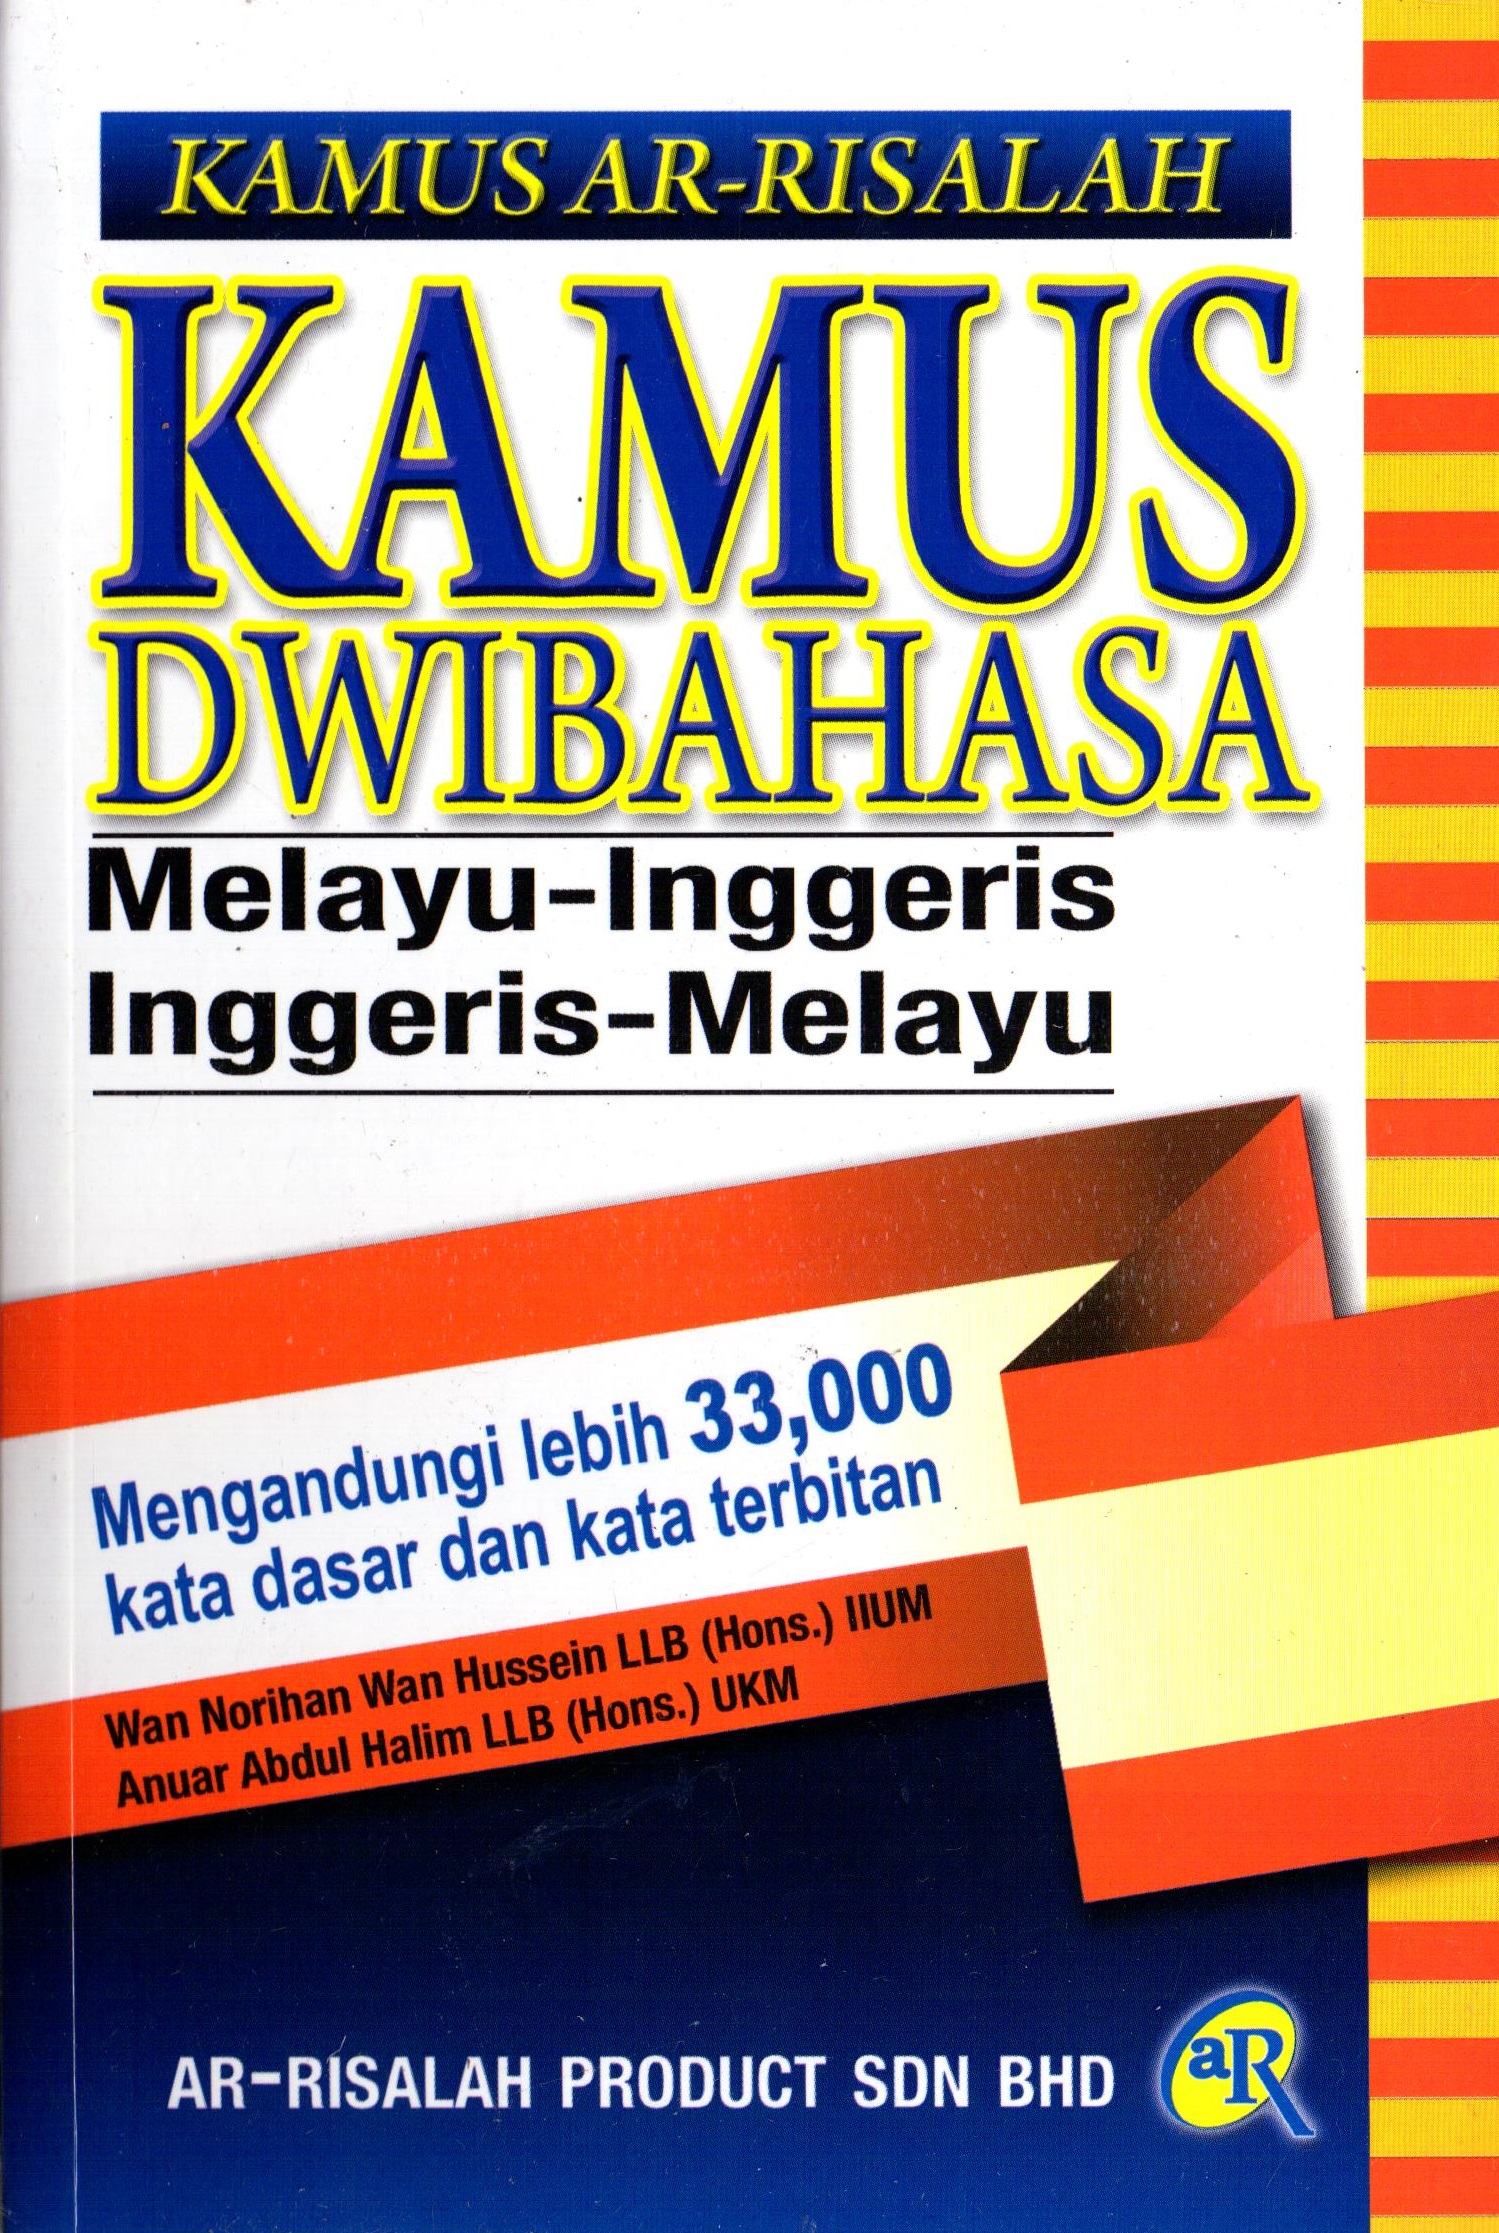 Kamus dwibahasa malay-english